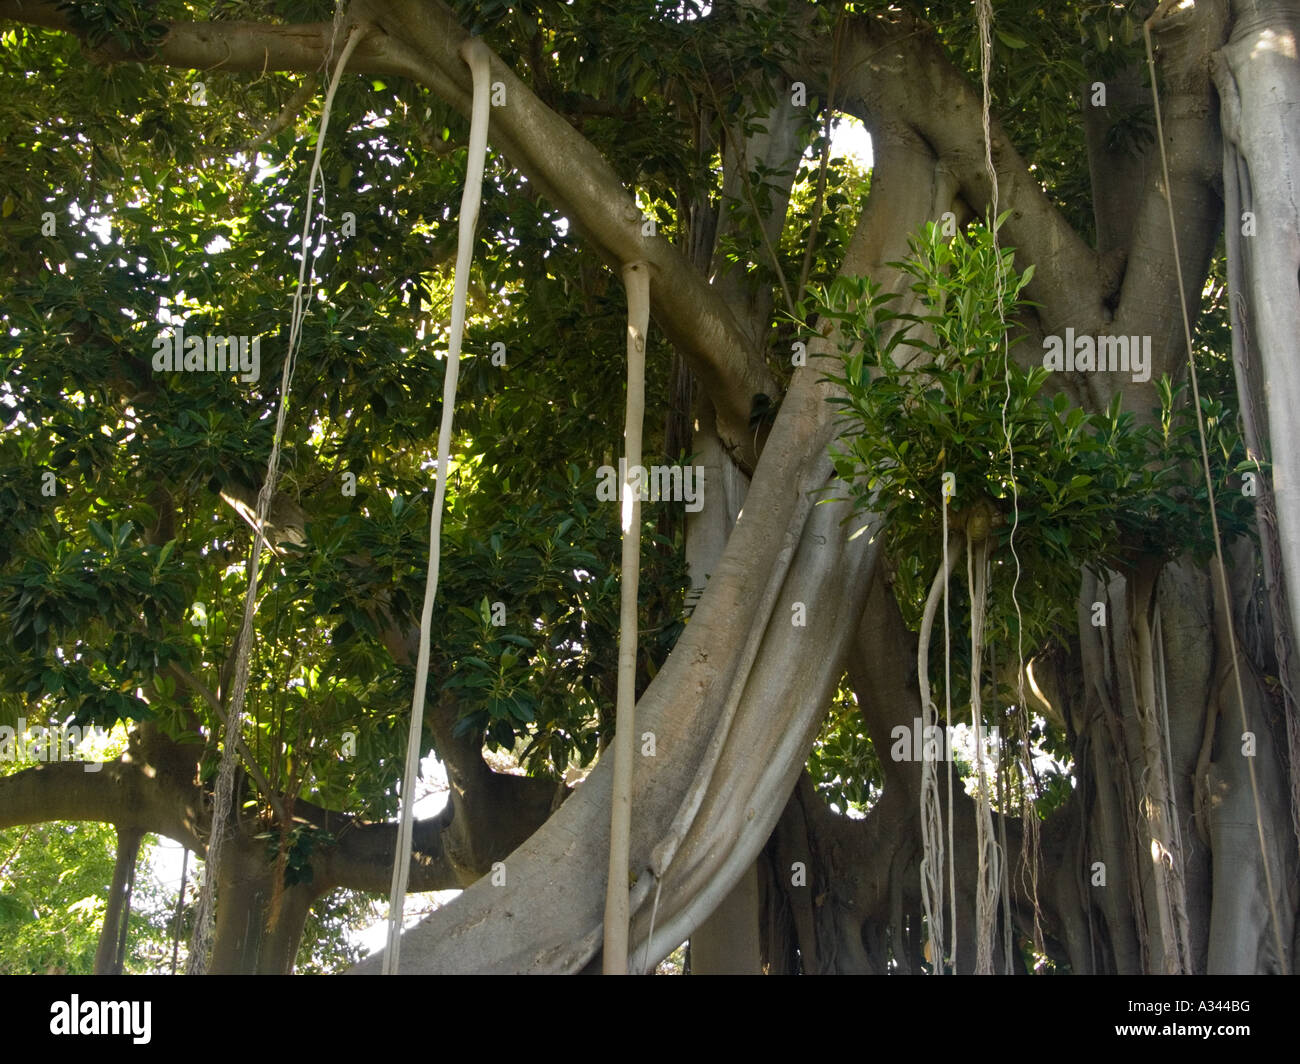 Coussapoa Dealbata also known as Rubber Tree, Ficus Macrophylla Stock Photo